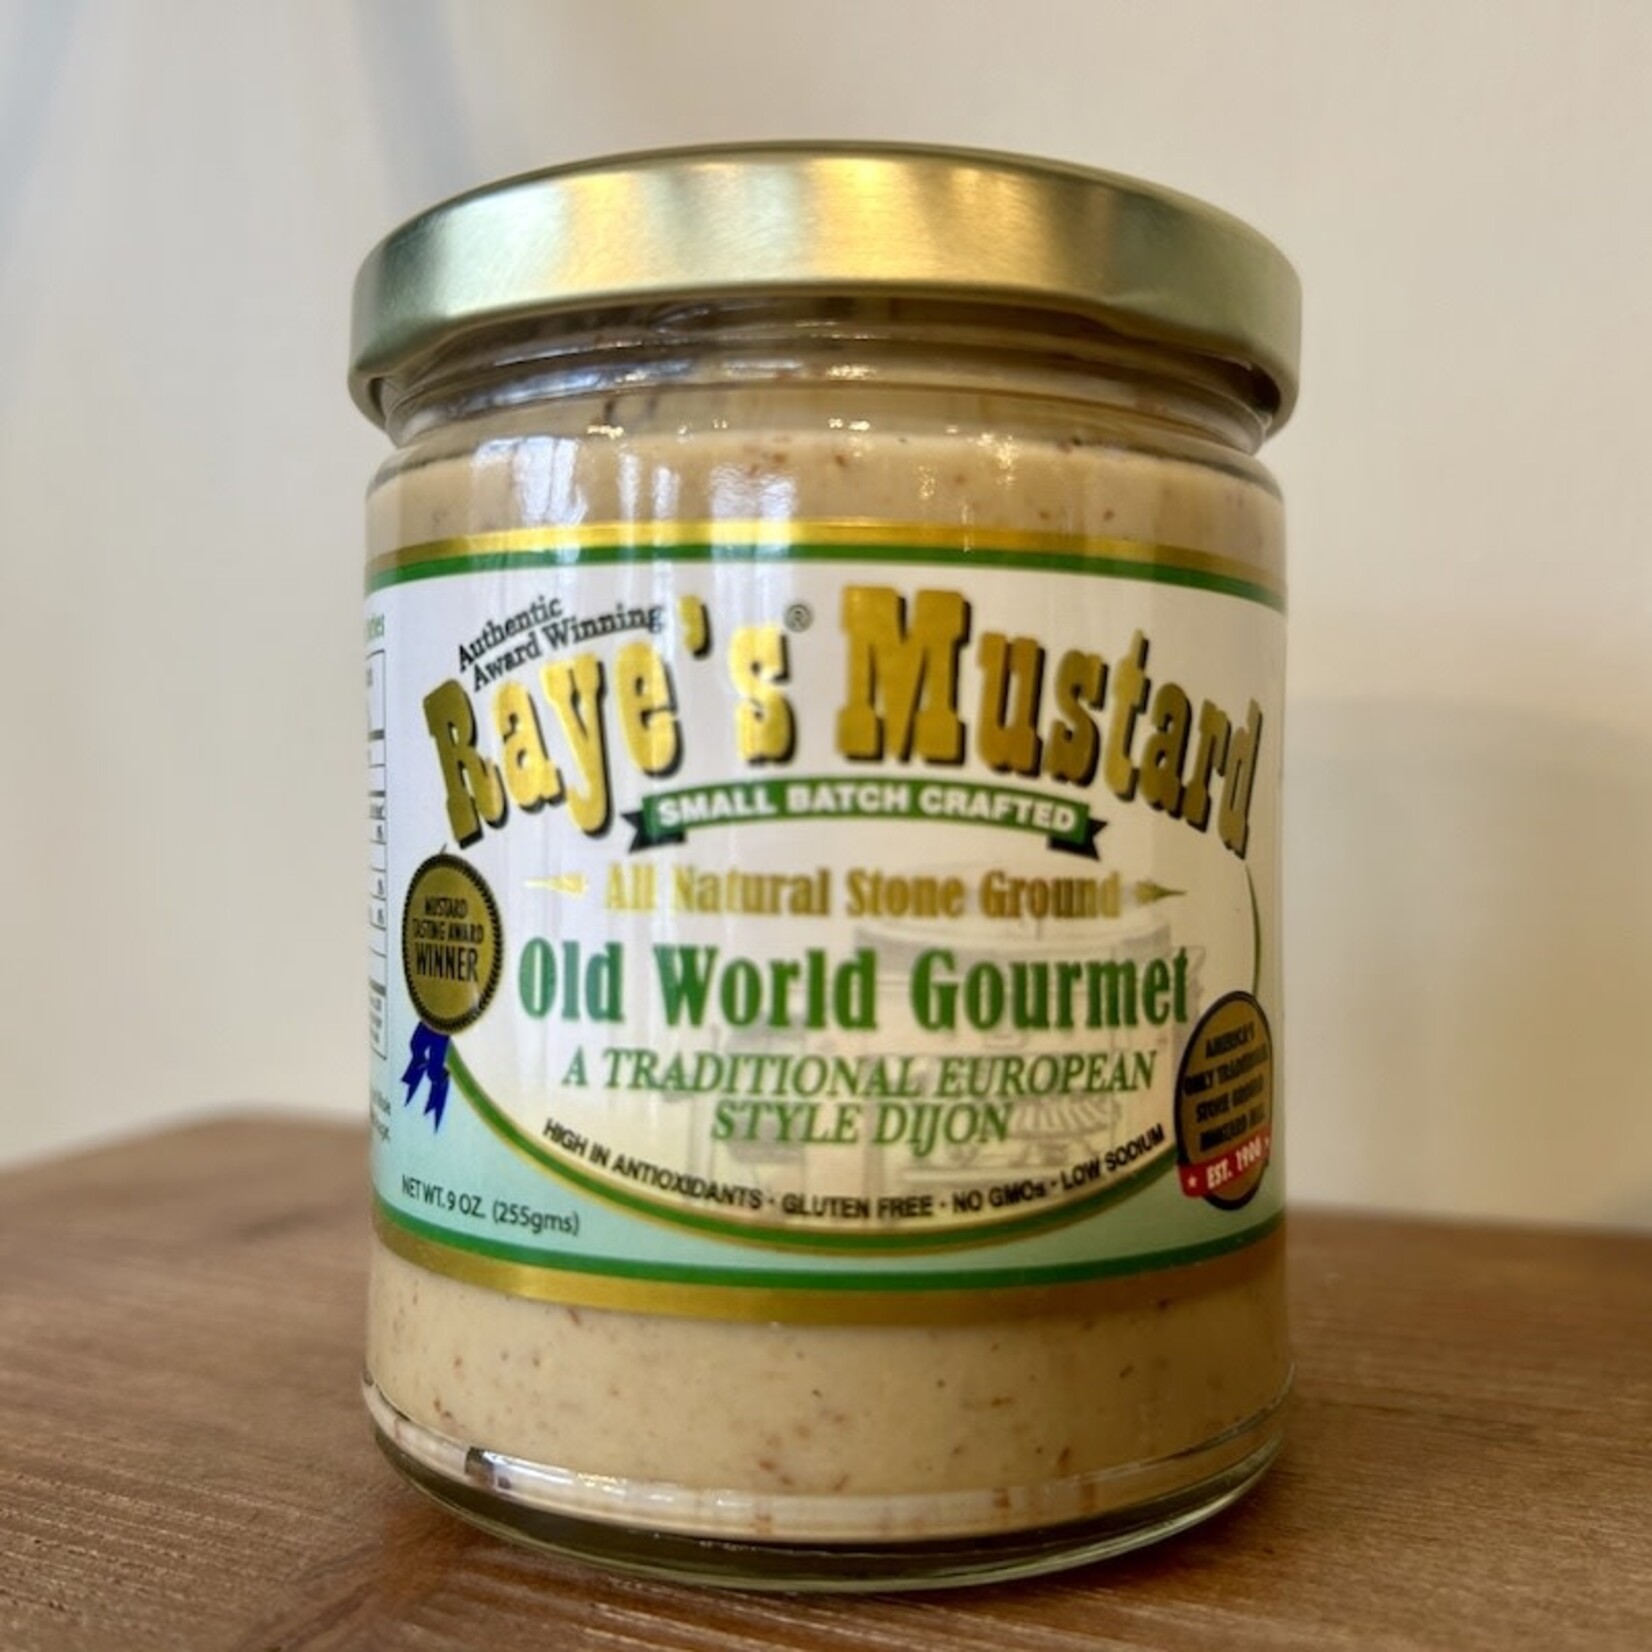 USA Raye's Old World Gourmet Mustard